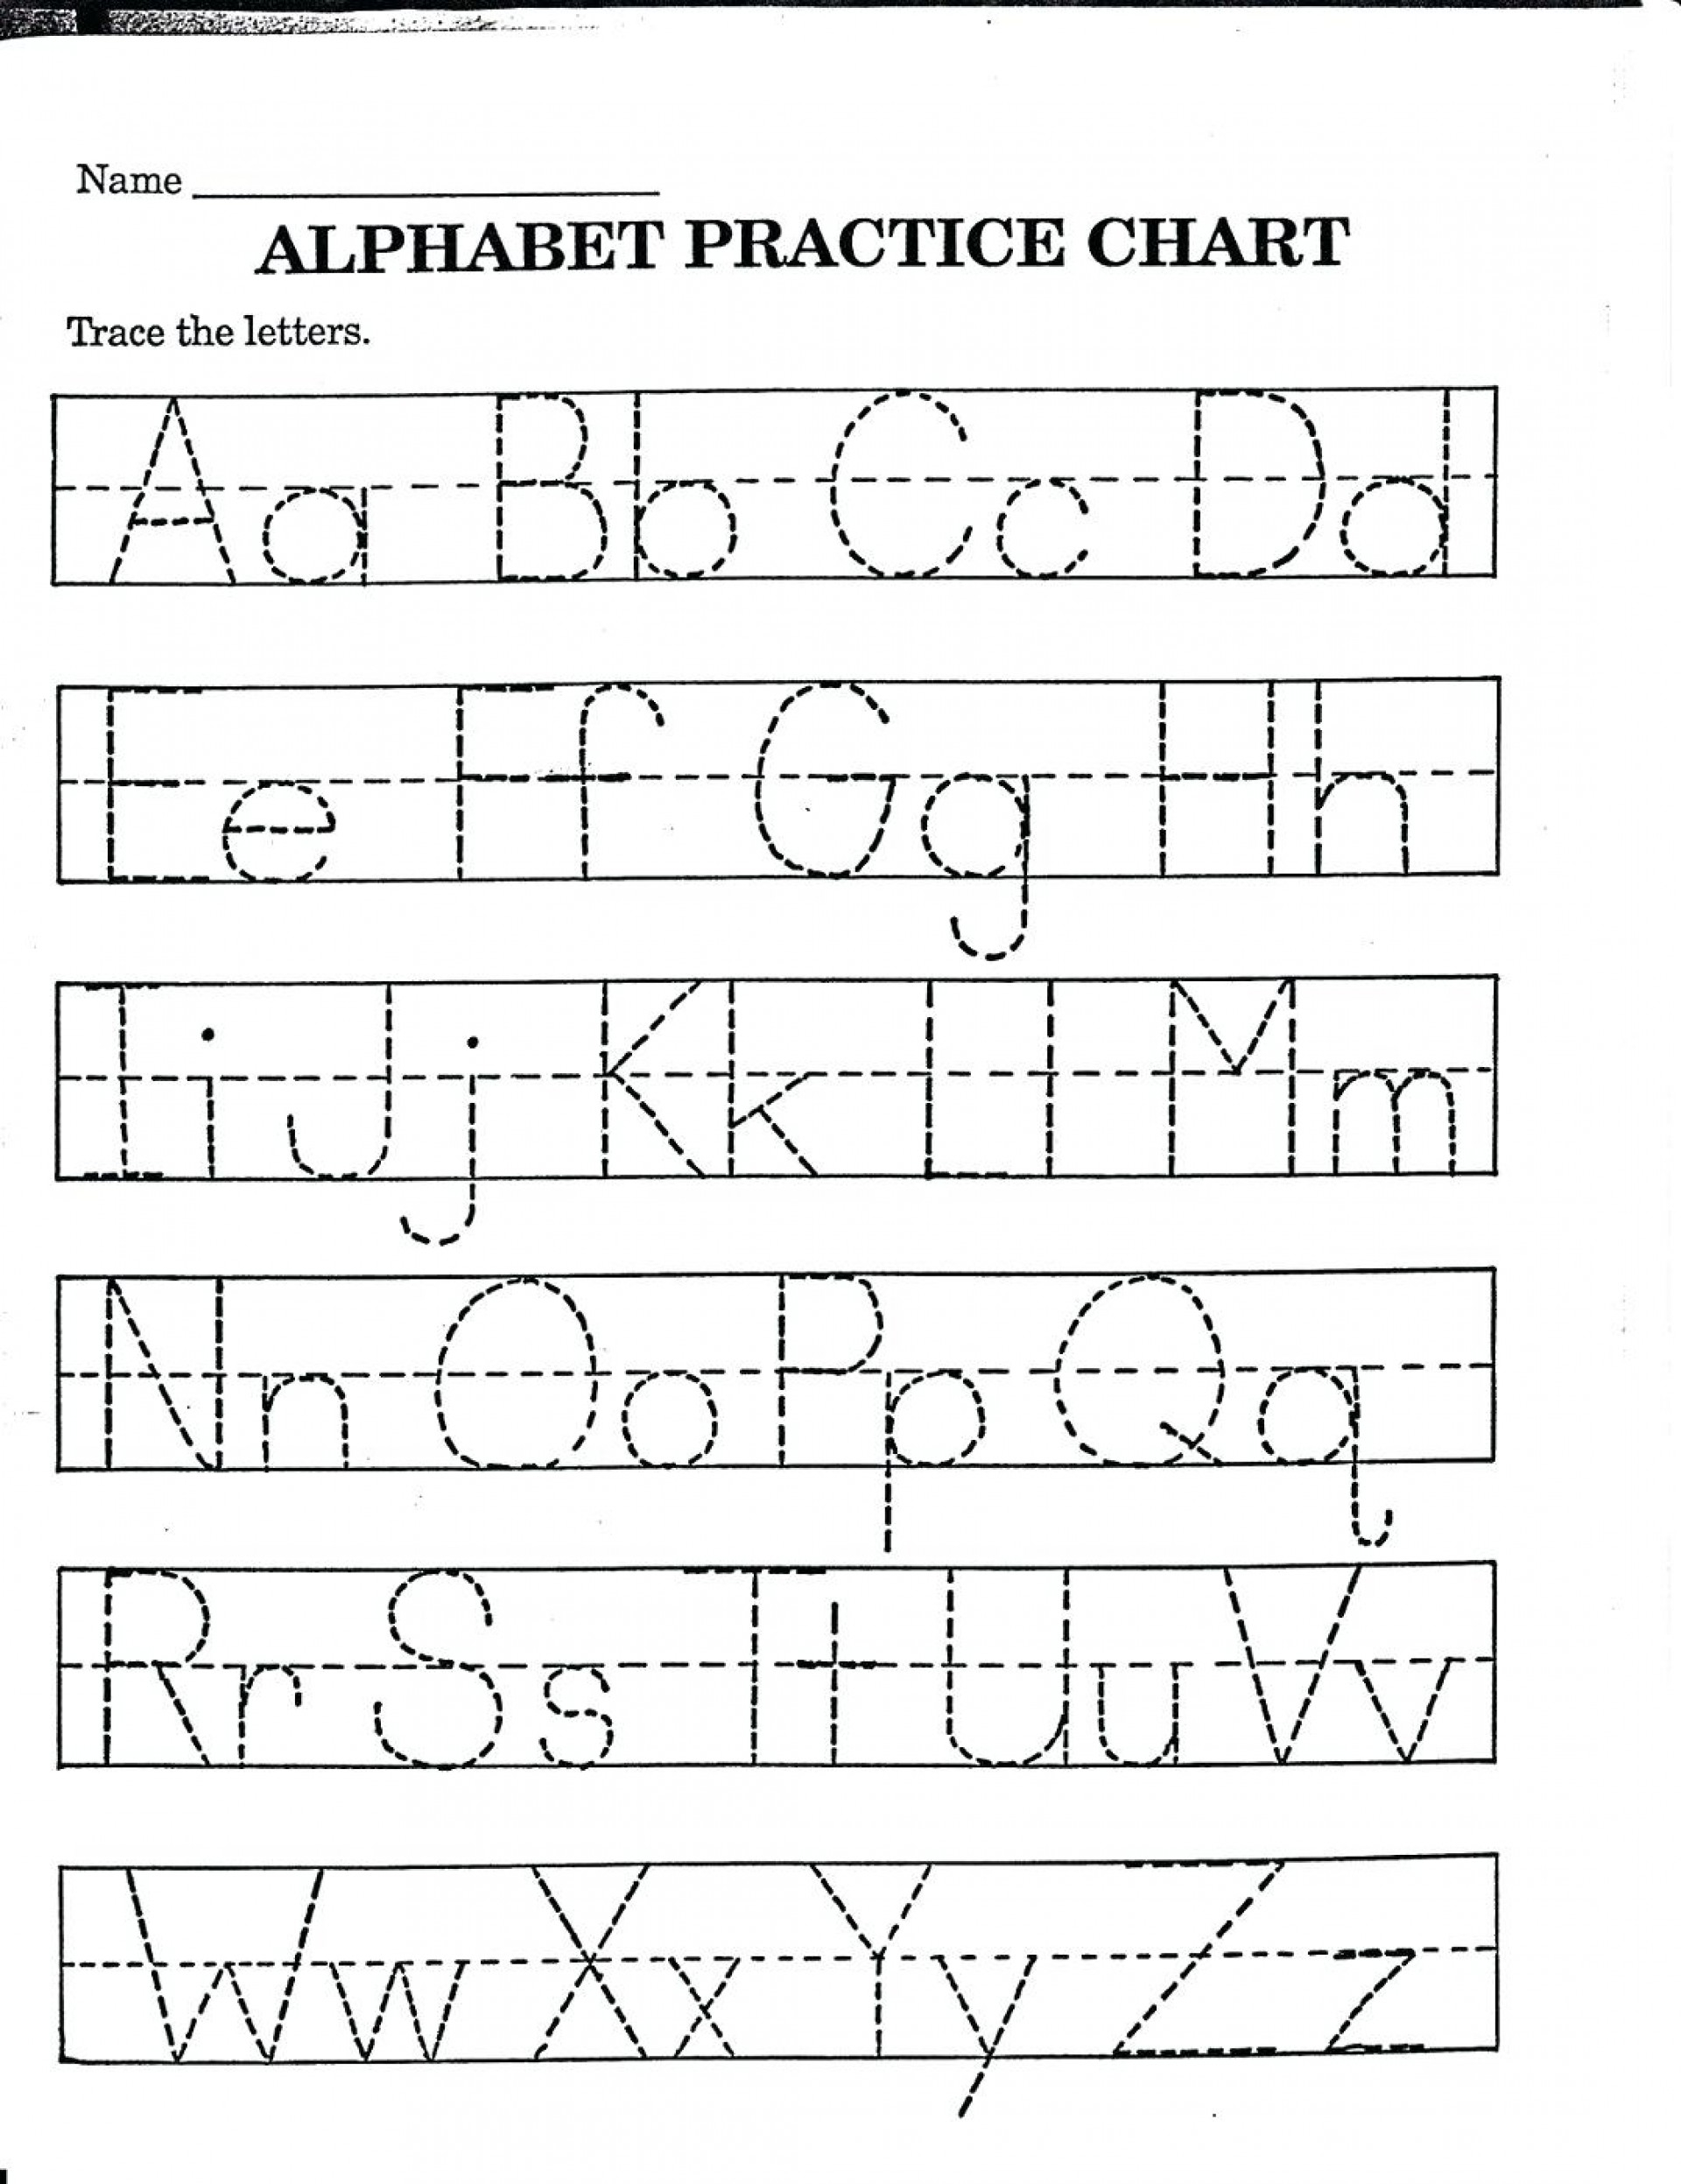 Tremendous Preschool Worksheets Alphabet Abc Games Image throughout Letter Tracing Online Games